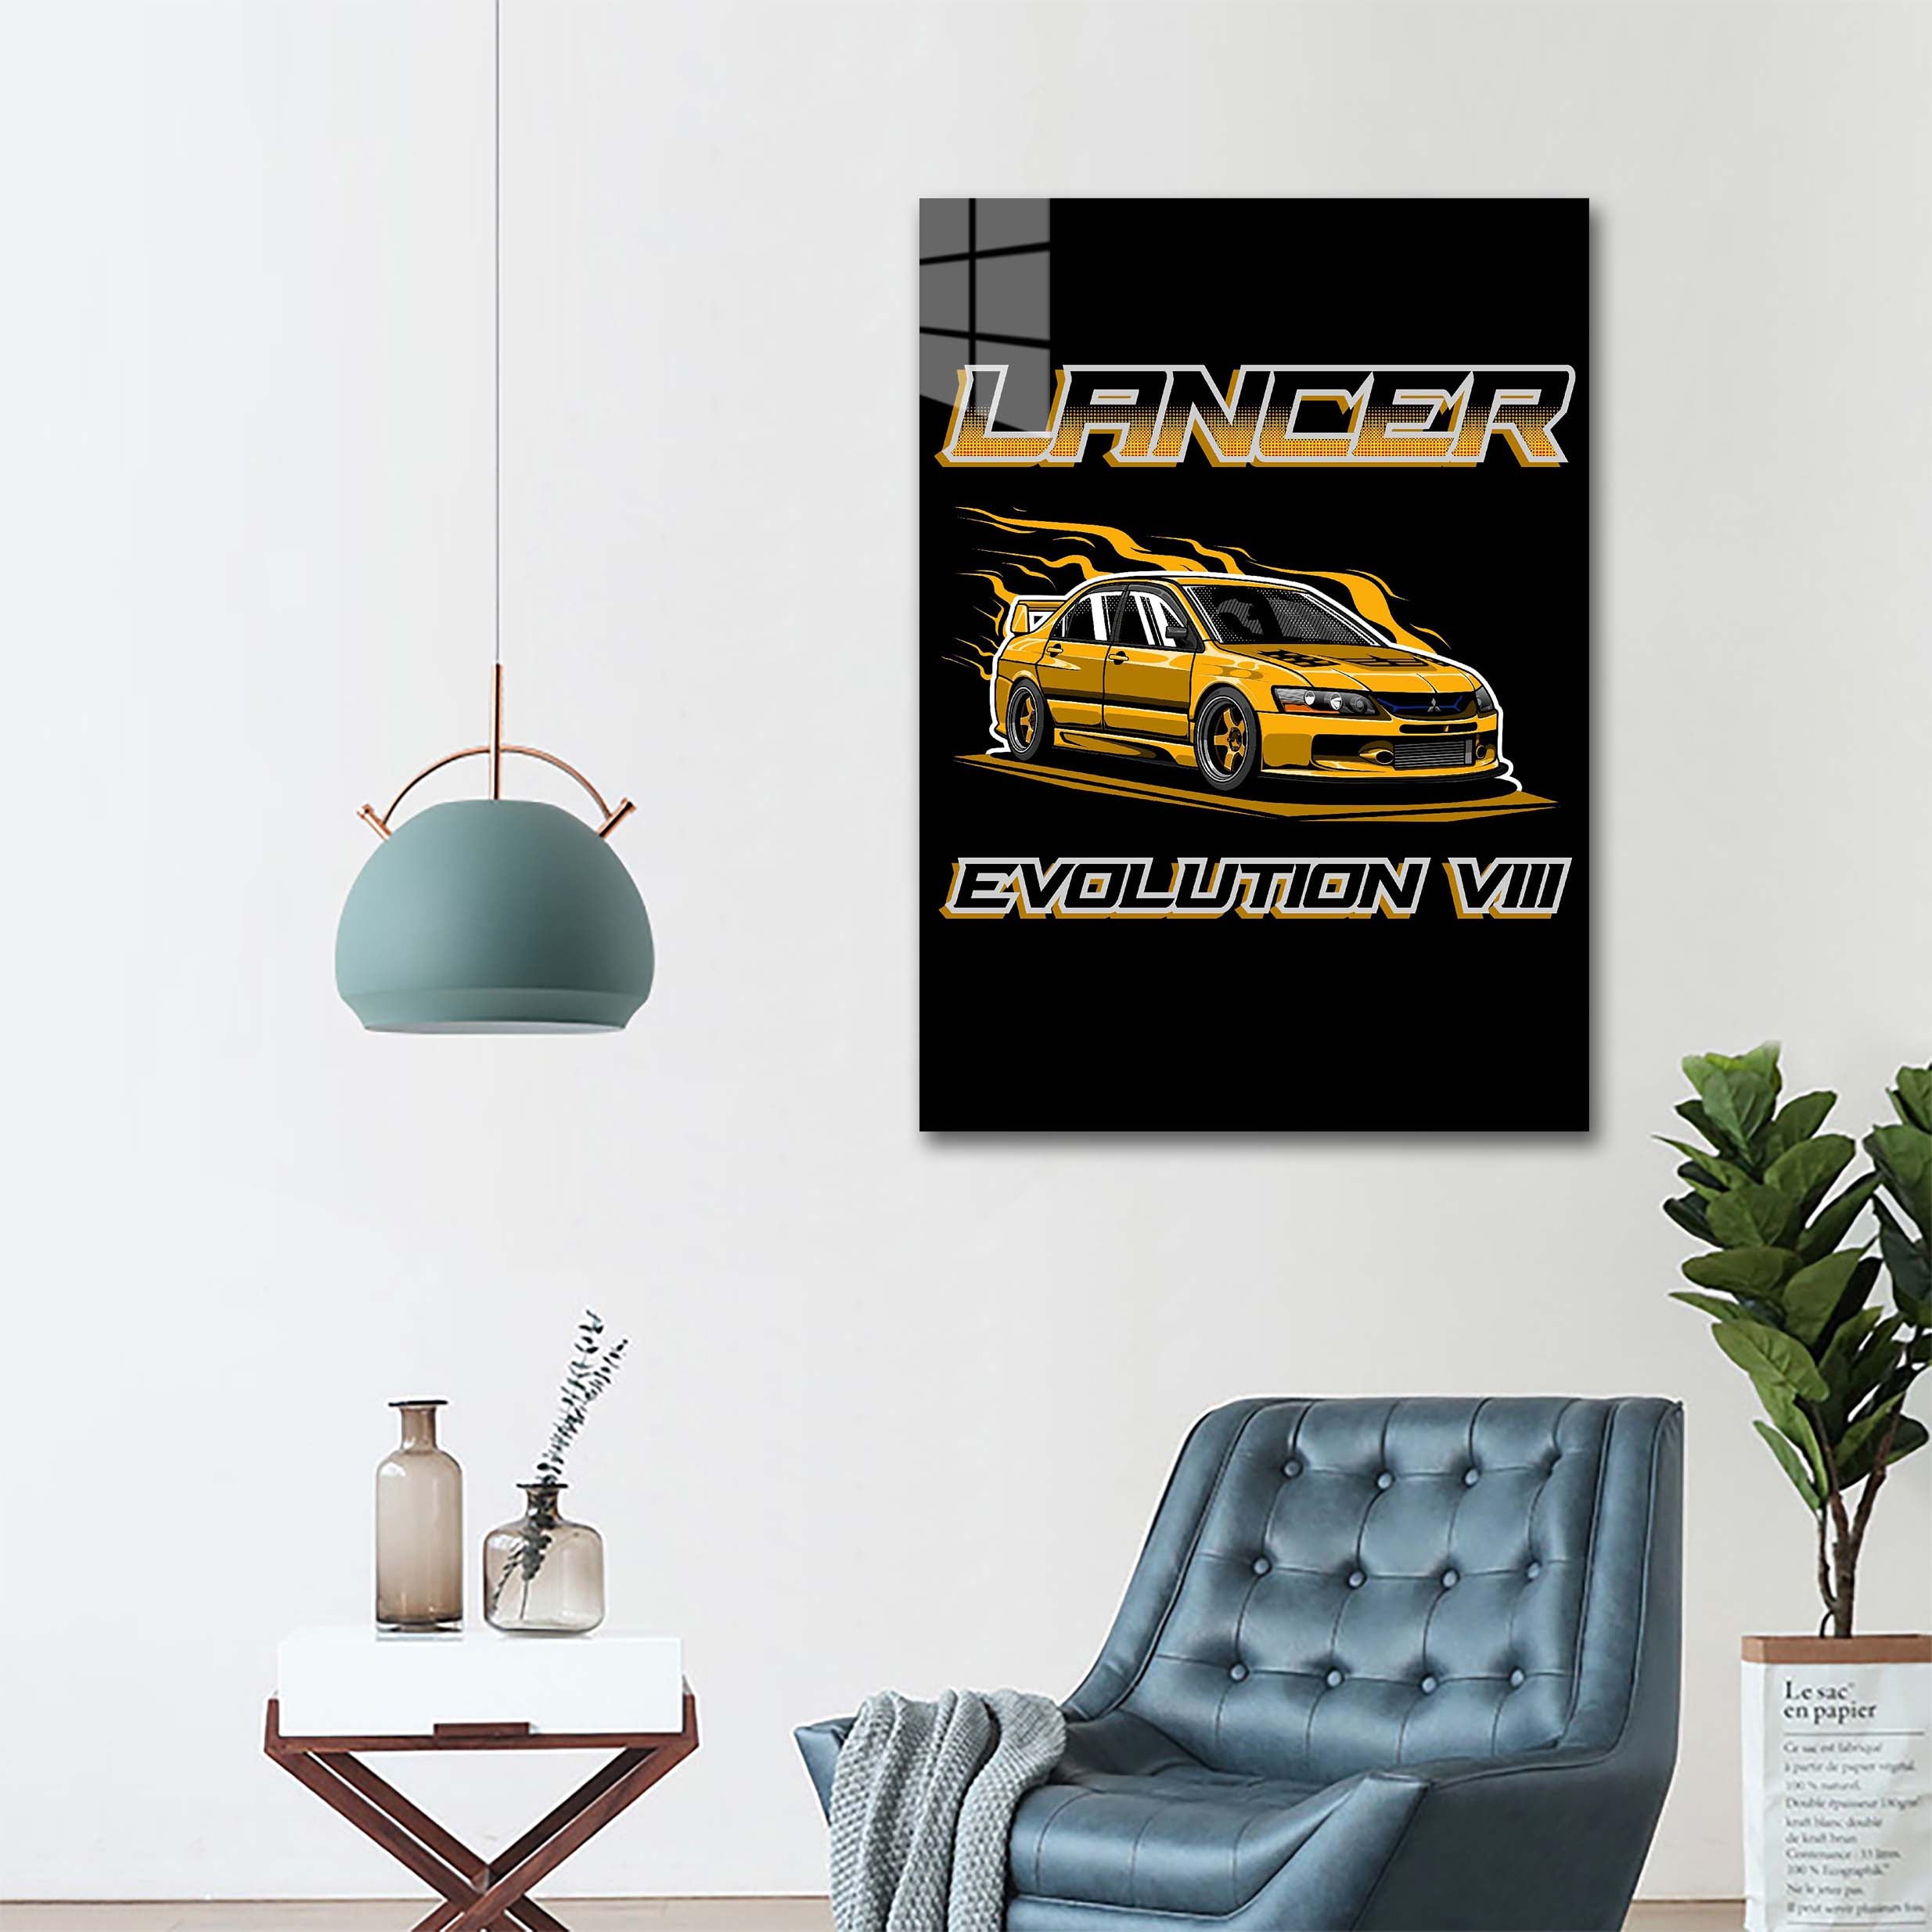 Lancer Evo 8 Yellow-designed by @Bulldsgn